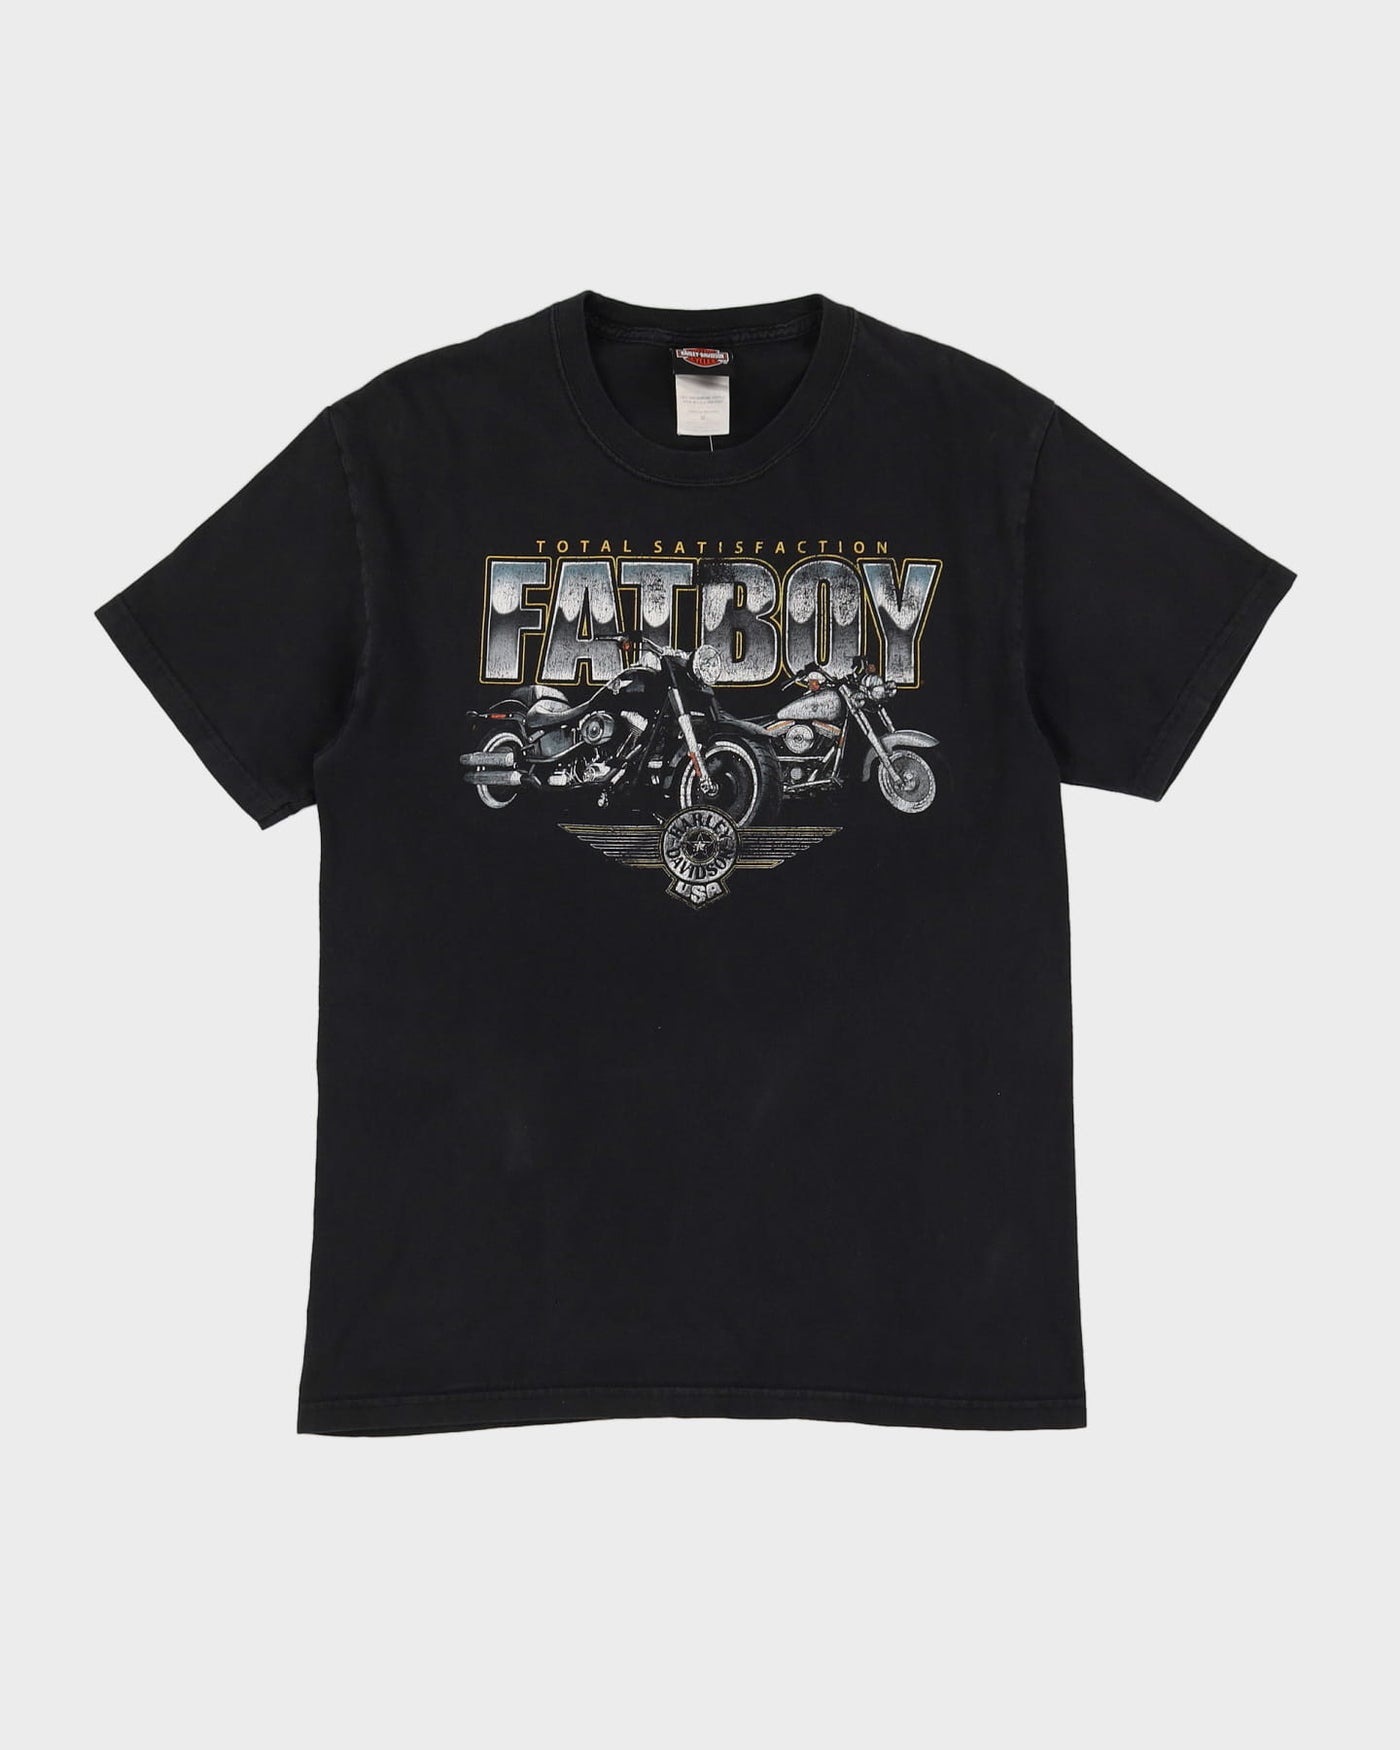 2003 Harley Davidson Fatboy Gasoline Alley Black Graphic T-Shirt - M